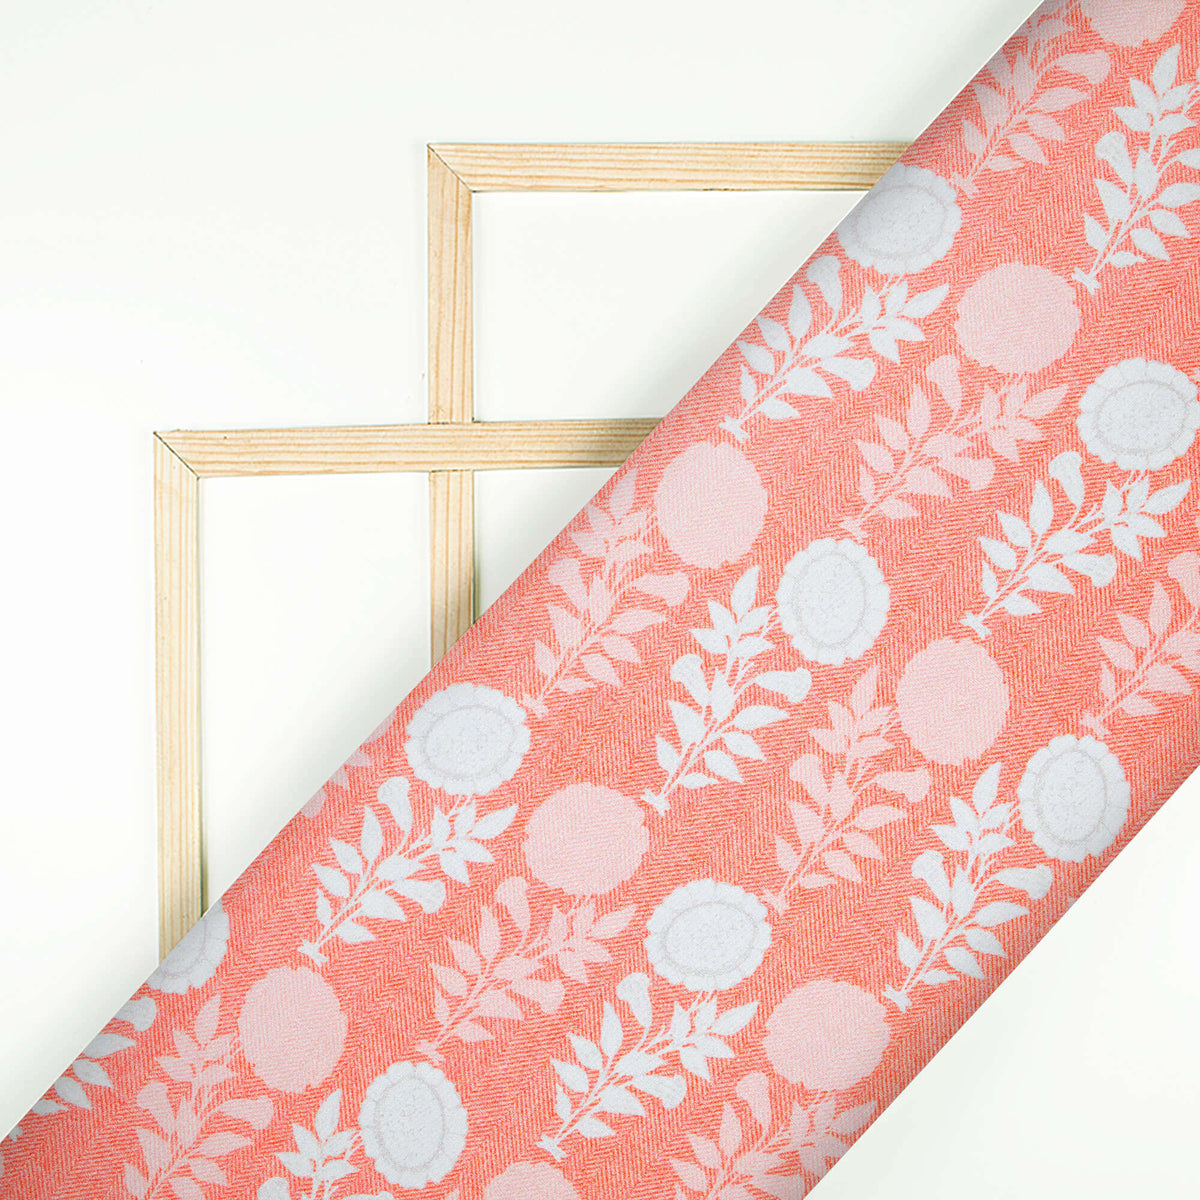 Salmon Pink And White Floral Pattern Digital Print Premium Lush Satin Fabric